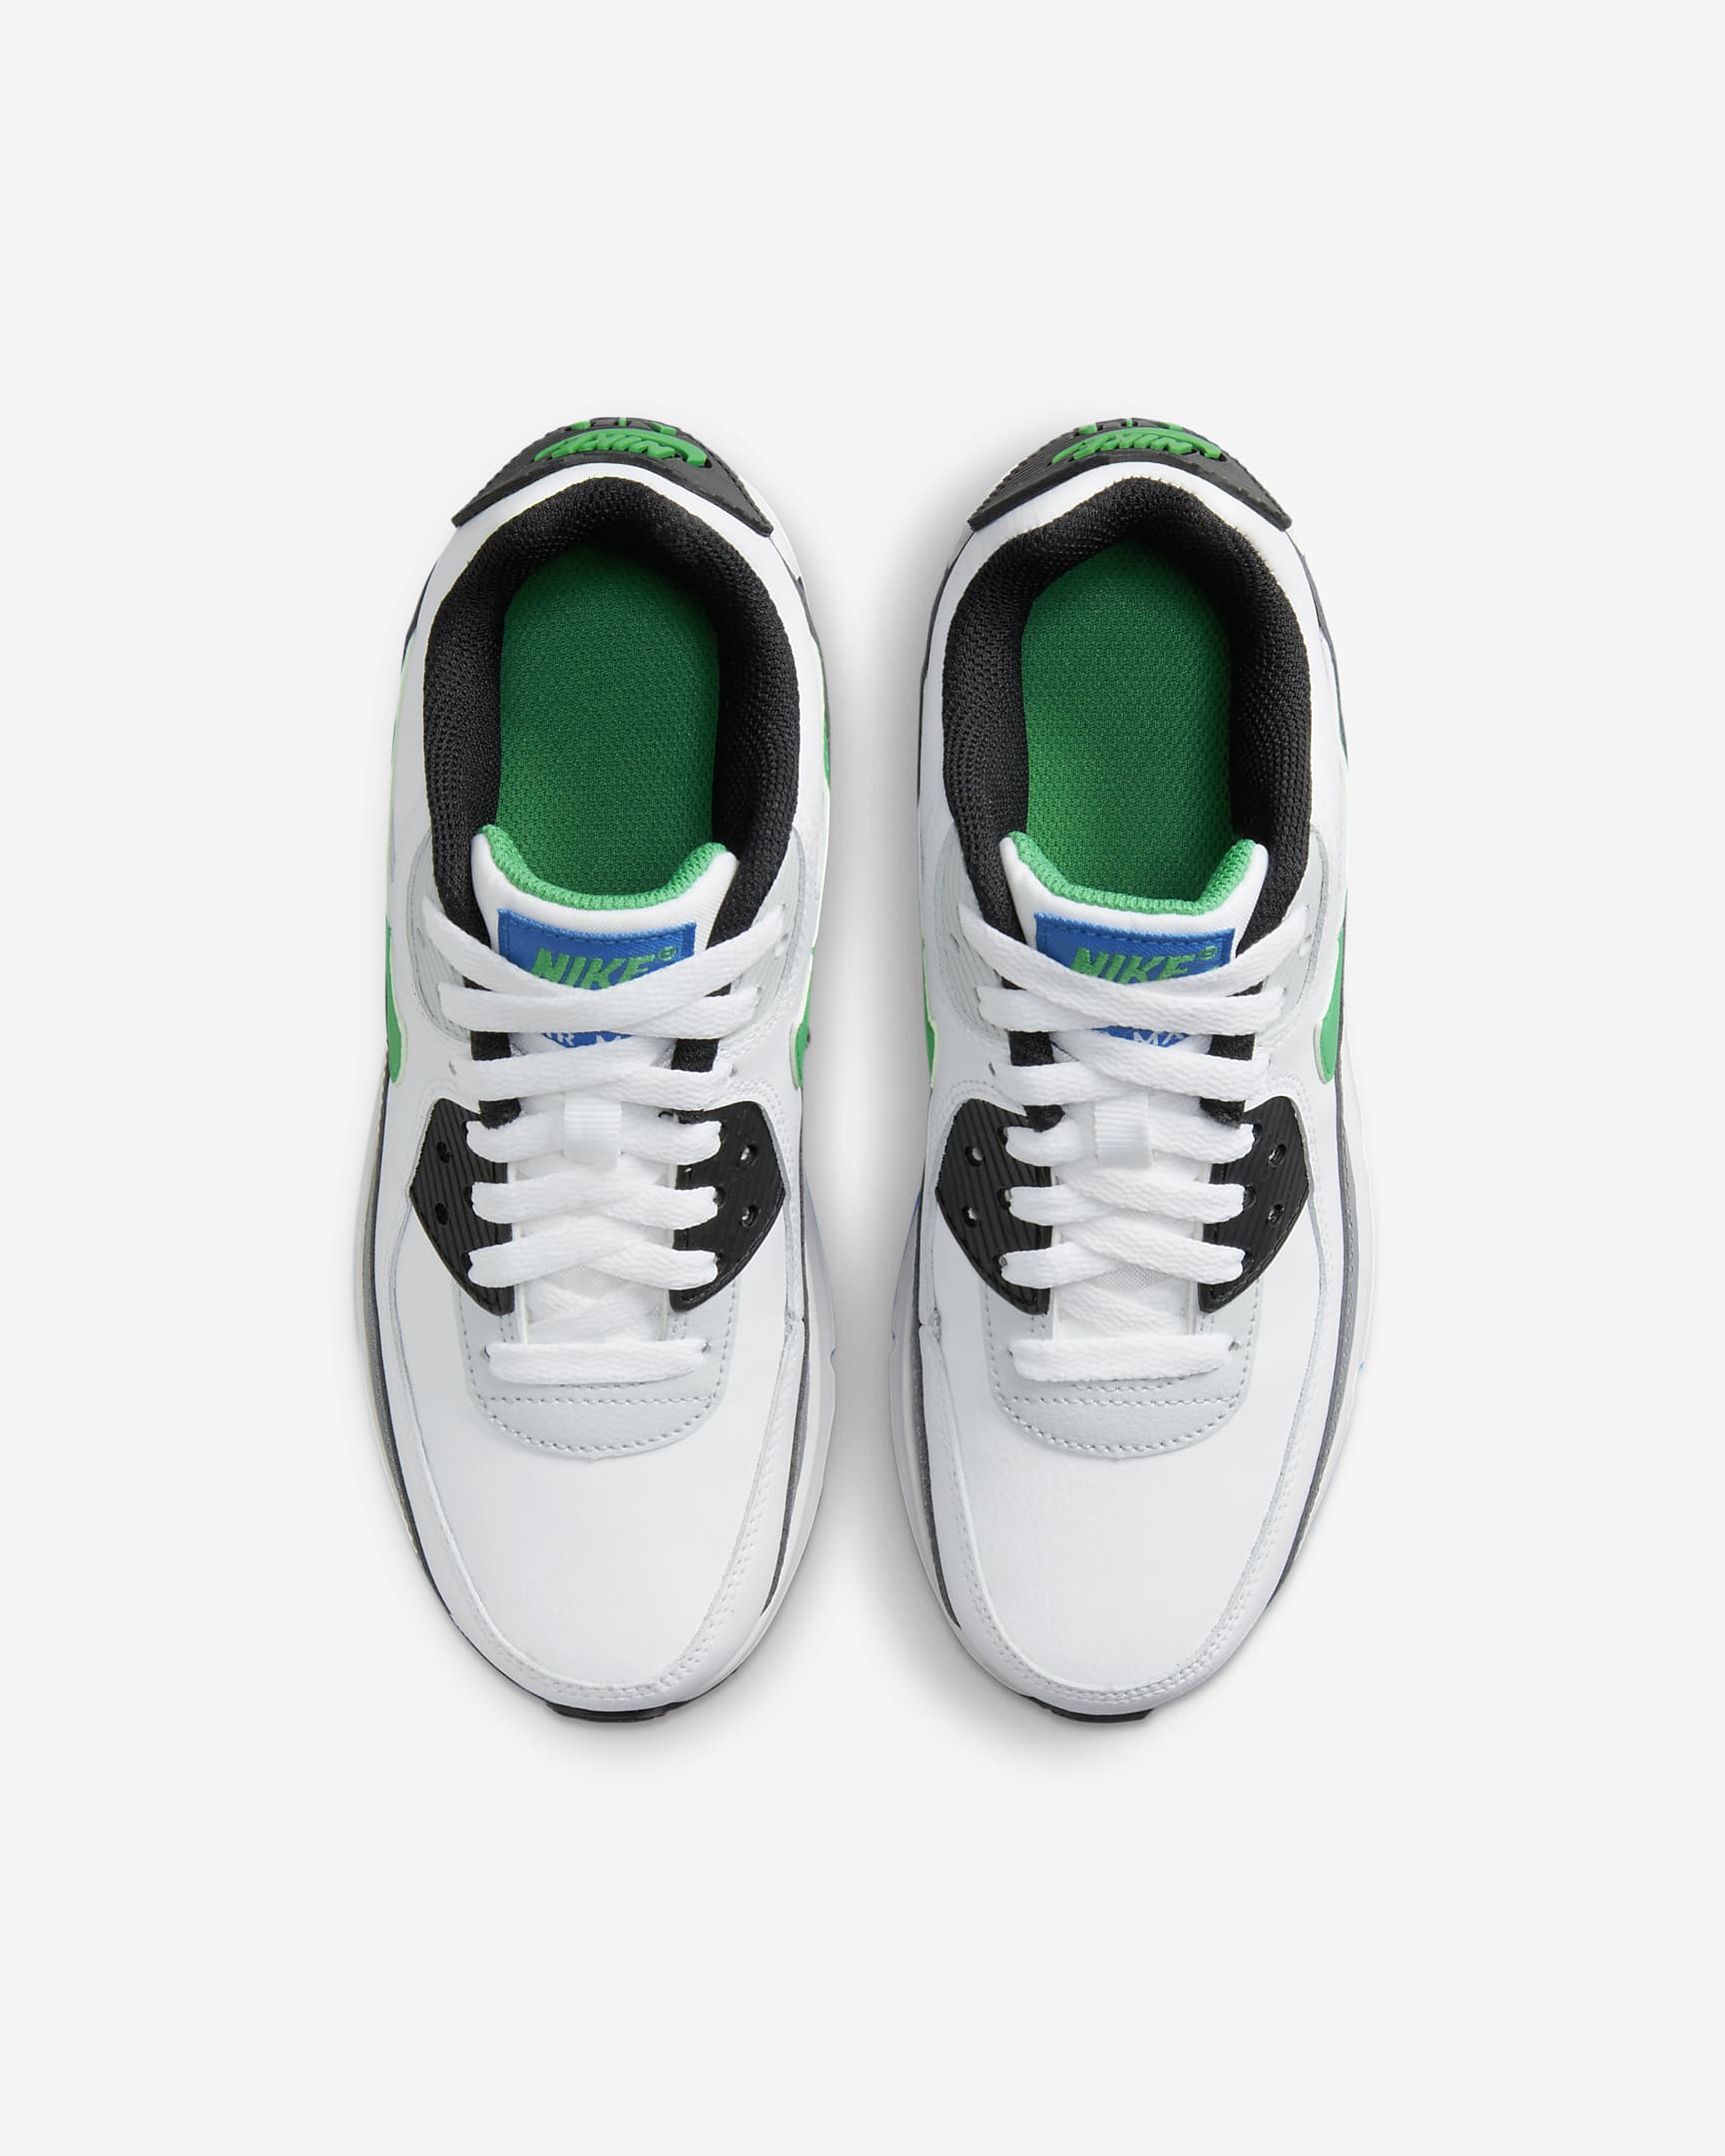 Nike Air Max 90 LTR Big Kids’ Shoes - White/Pure Platinum/Cool Grey/Stadium Green